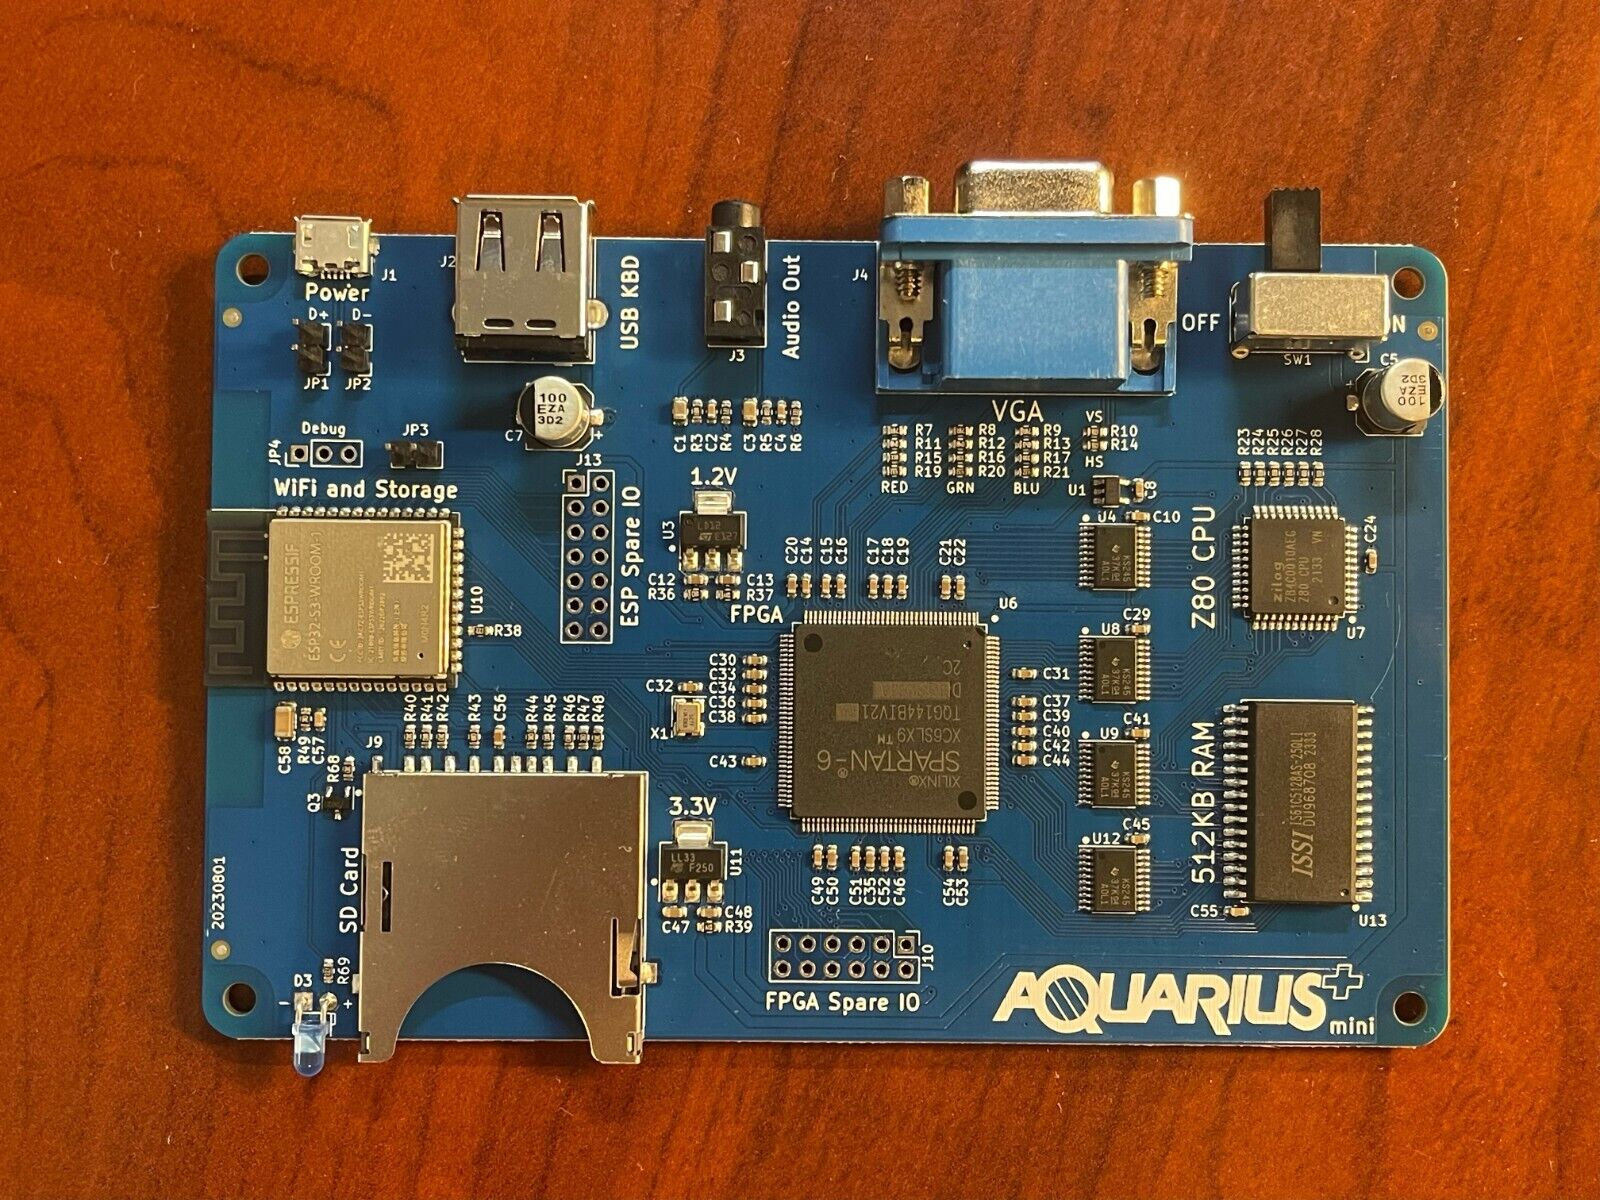 NEW Aquarius+ Mini 8Bit Retro Computer System - Assembled PCB ONLY